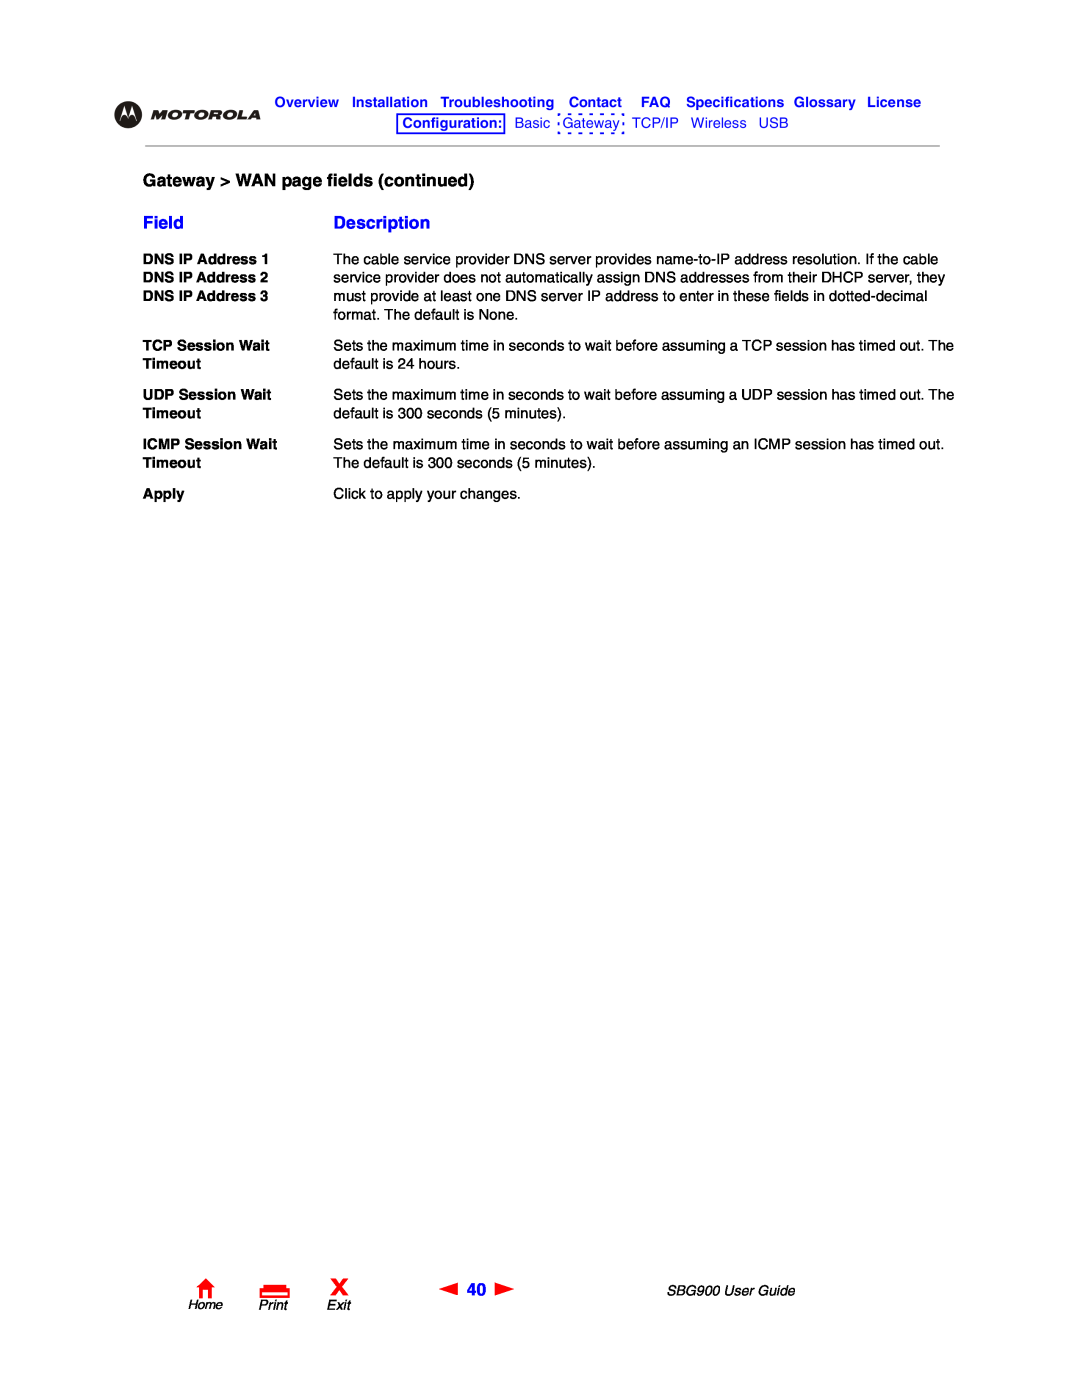 Motorola SBG900 manual Gateway WAN page fields continued, Field, Description, Home Print Exit 